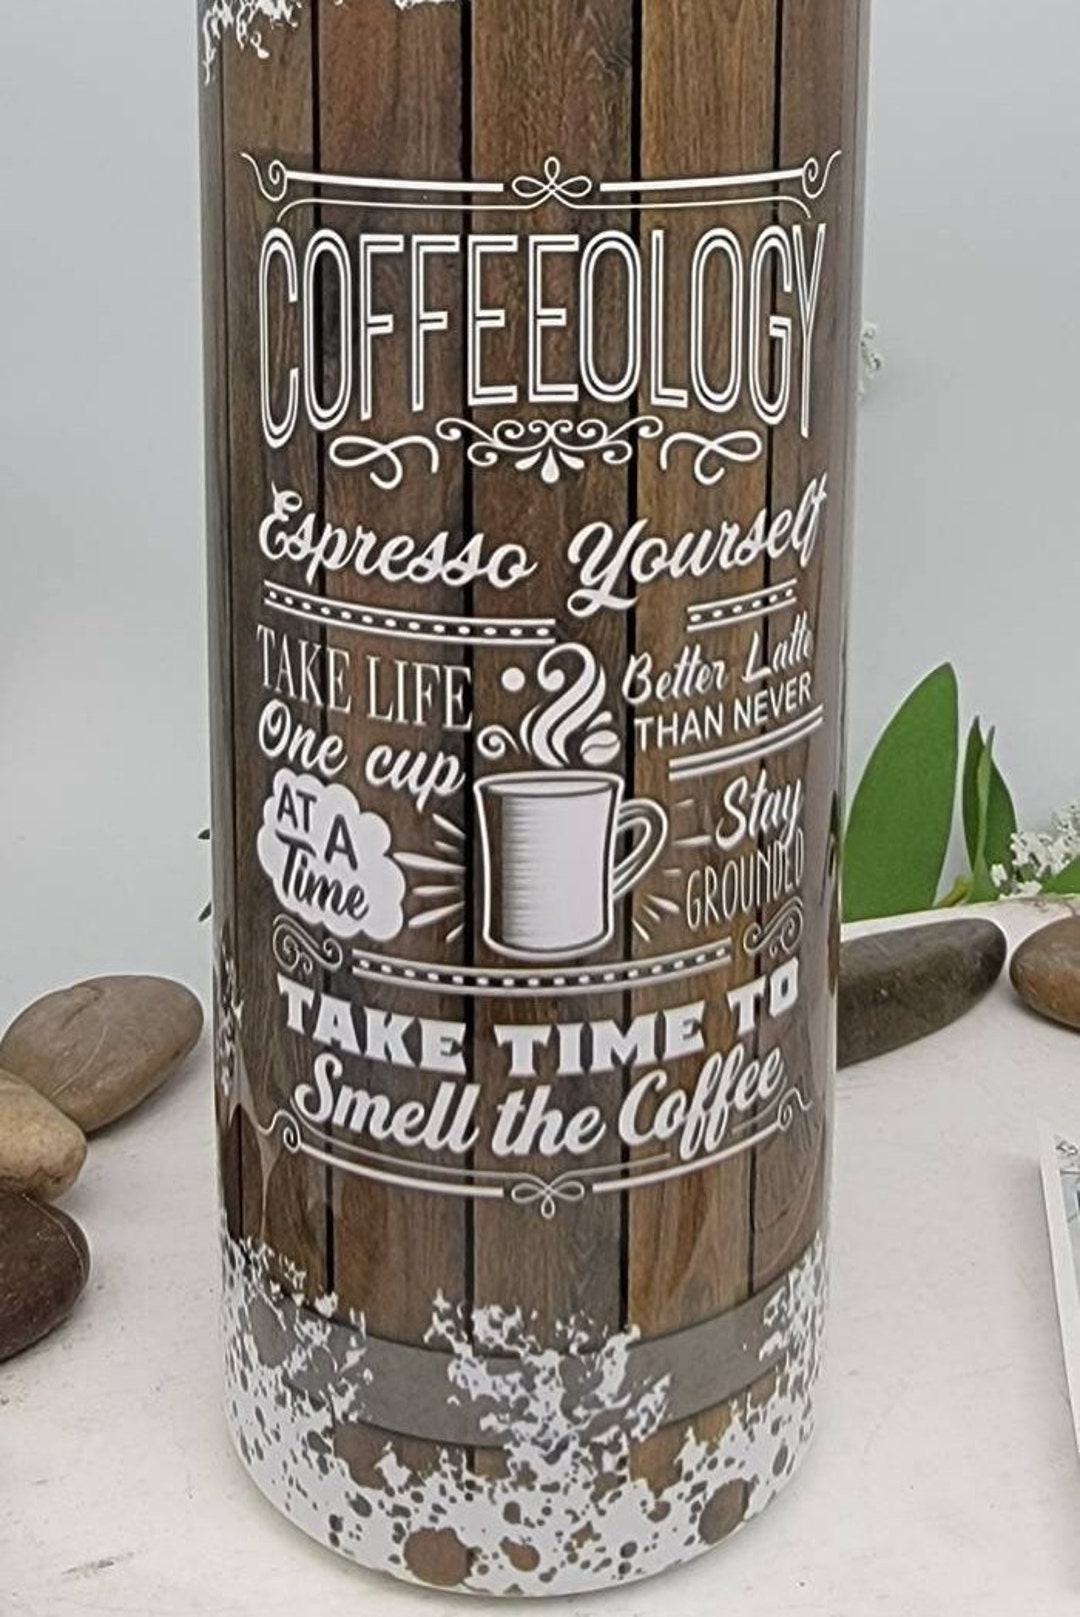 Coffee Coffeeology Espresso 20 oz Skinny Tumbler